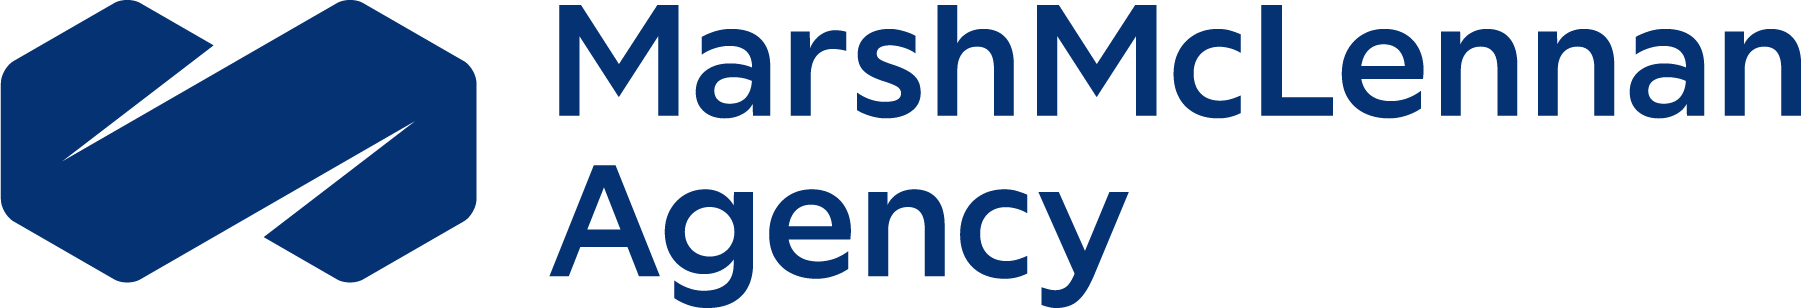 Marsh & McLennan Agency LLC